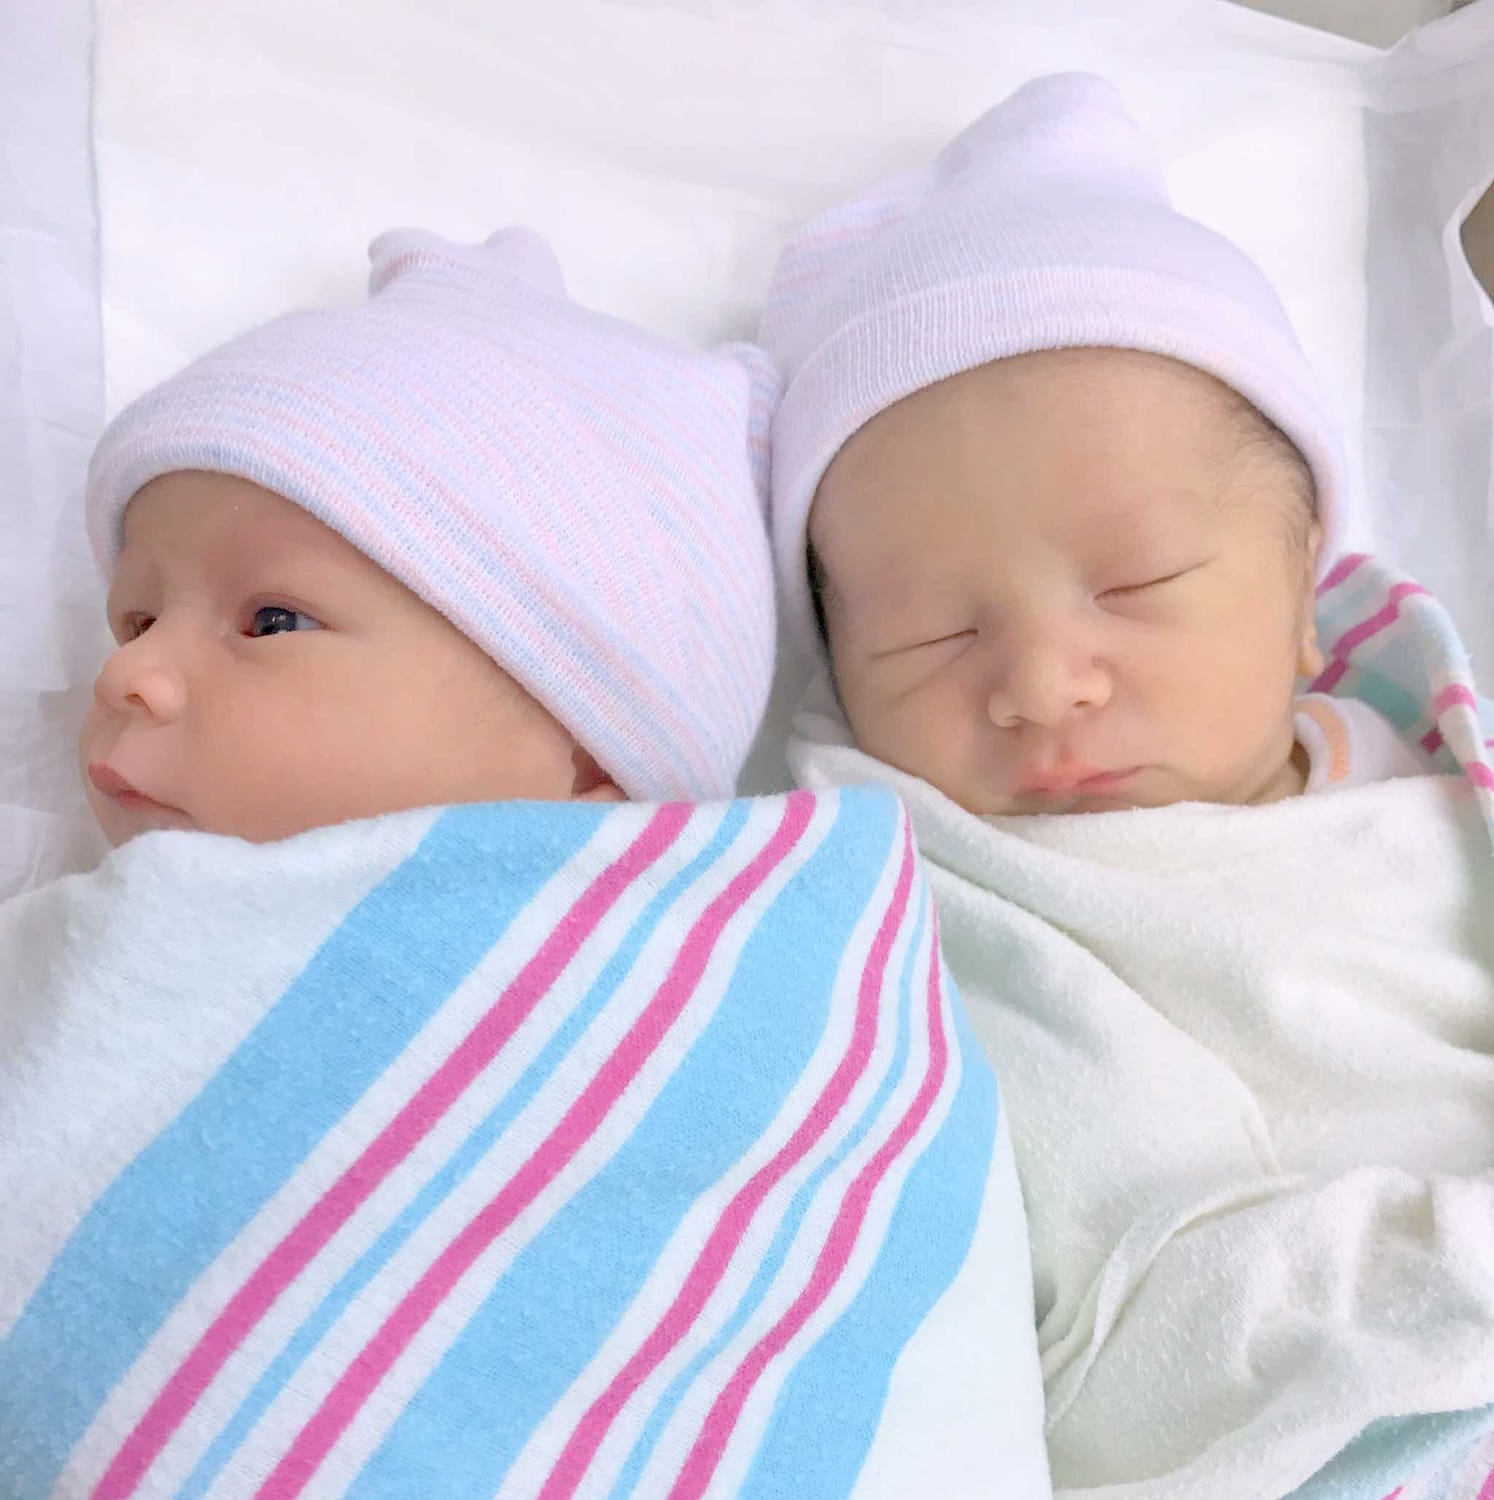 teamfsc babies born through surrogacy in 2017